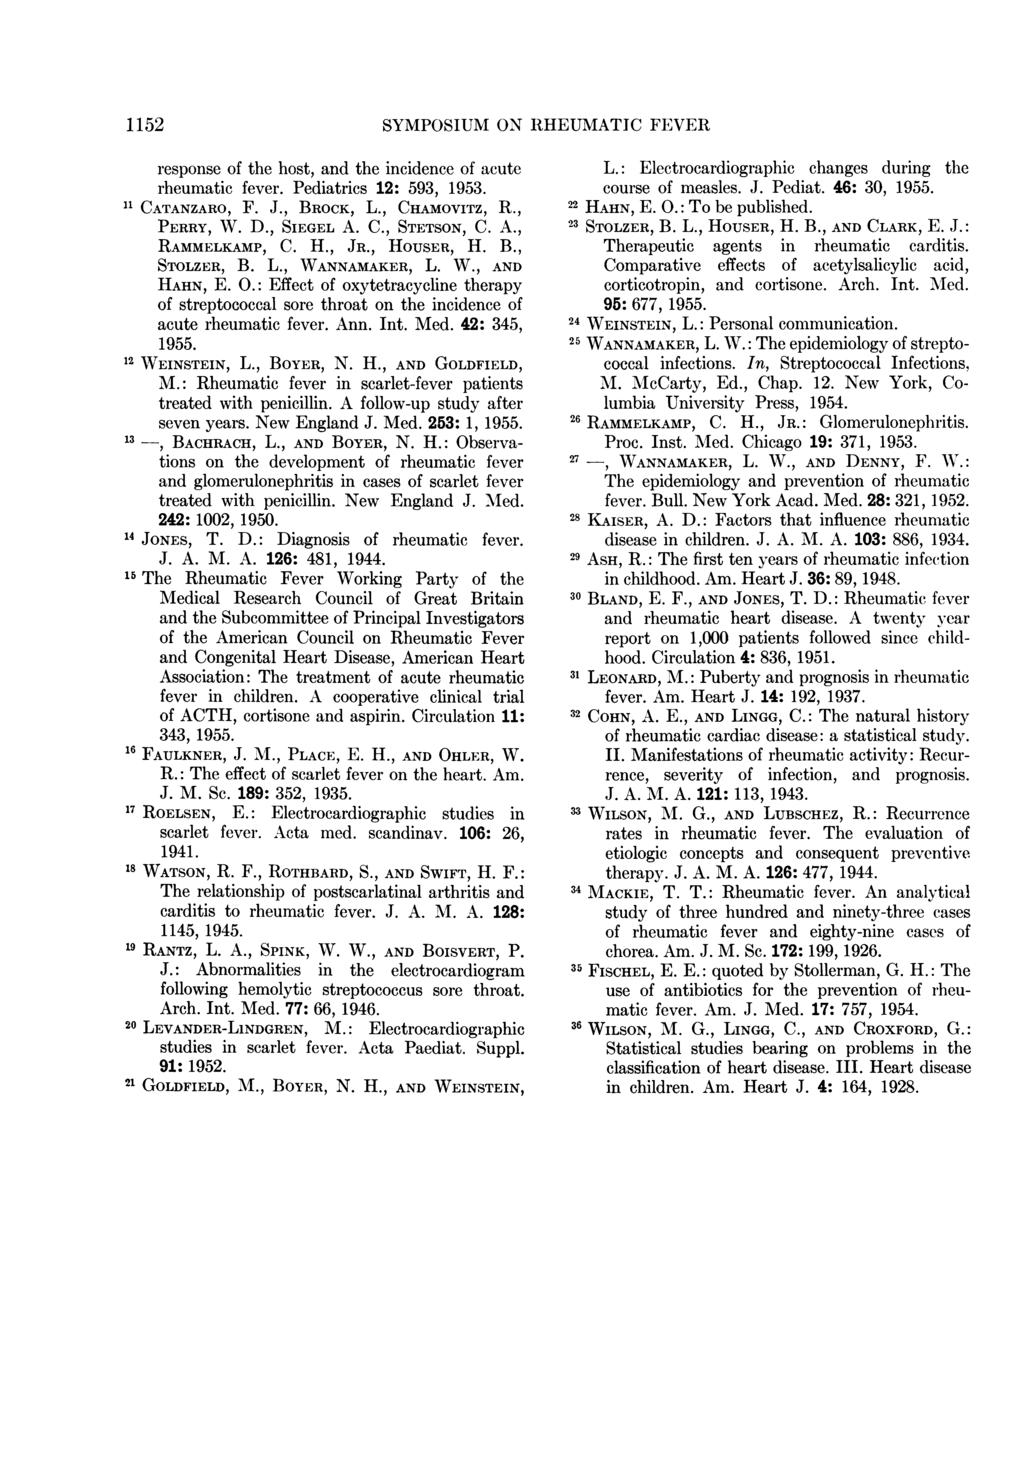 1152 SYMPOSIUM ON RHEUMATIC FEVER response of the host, and the incidence of acute rheumatic fever. Pediatrics 12: 593, 1953. 11 CATANZARO, F. J., BROCK, L., CHAMOVITZ, R., PERRY, WV. D., SIEGEL A. C., STETSON, C.